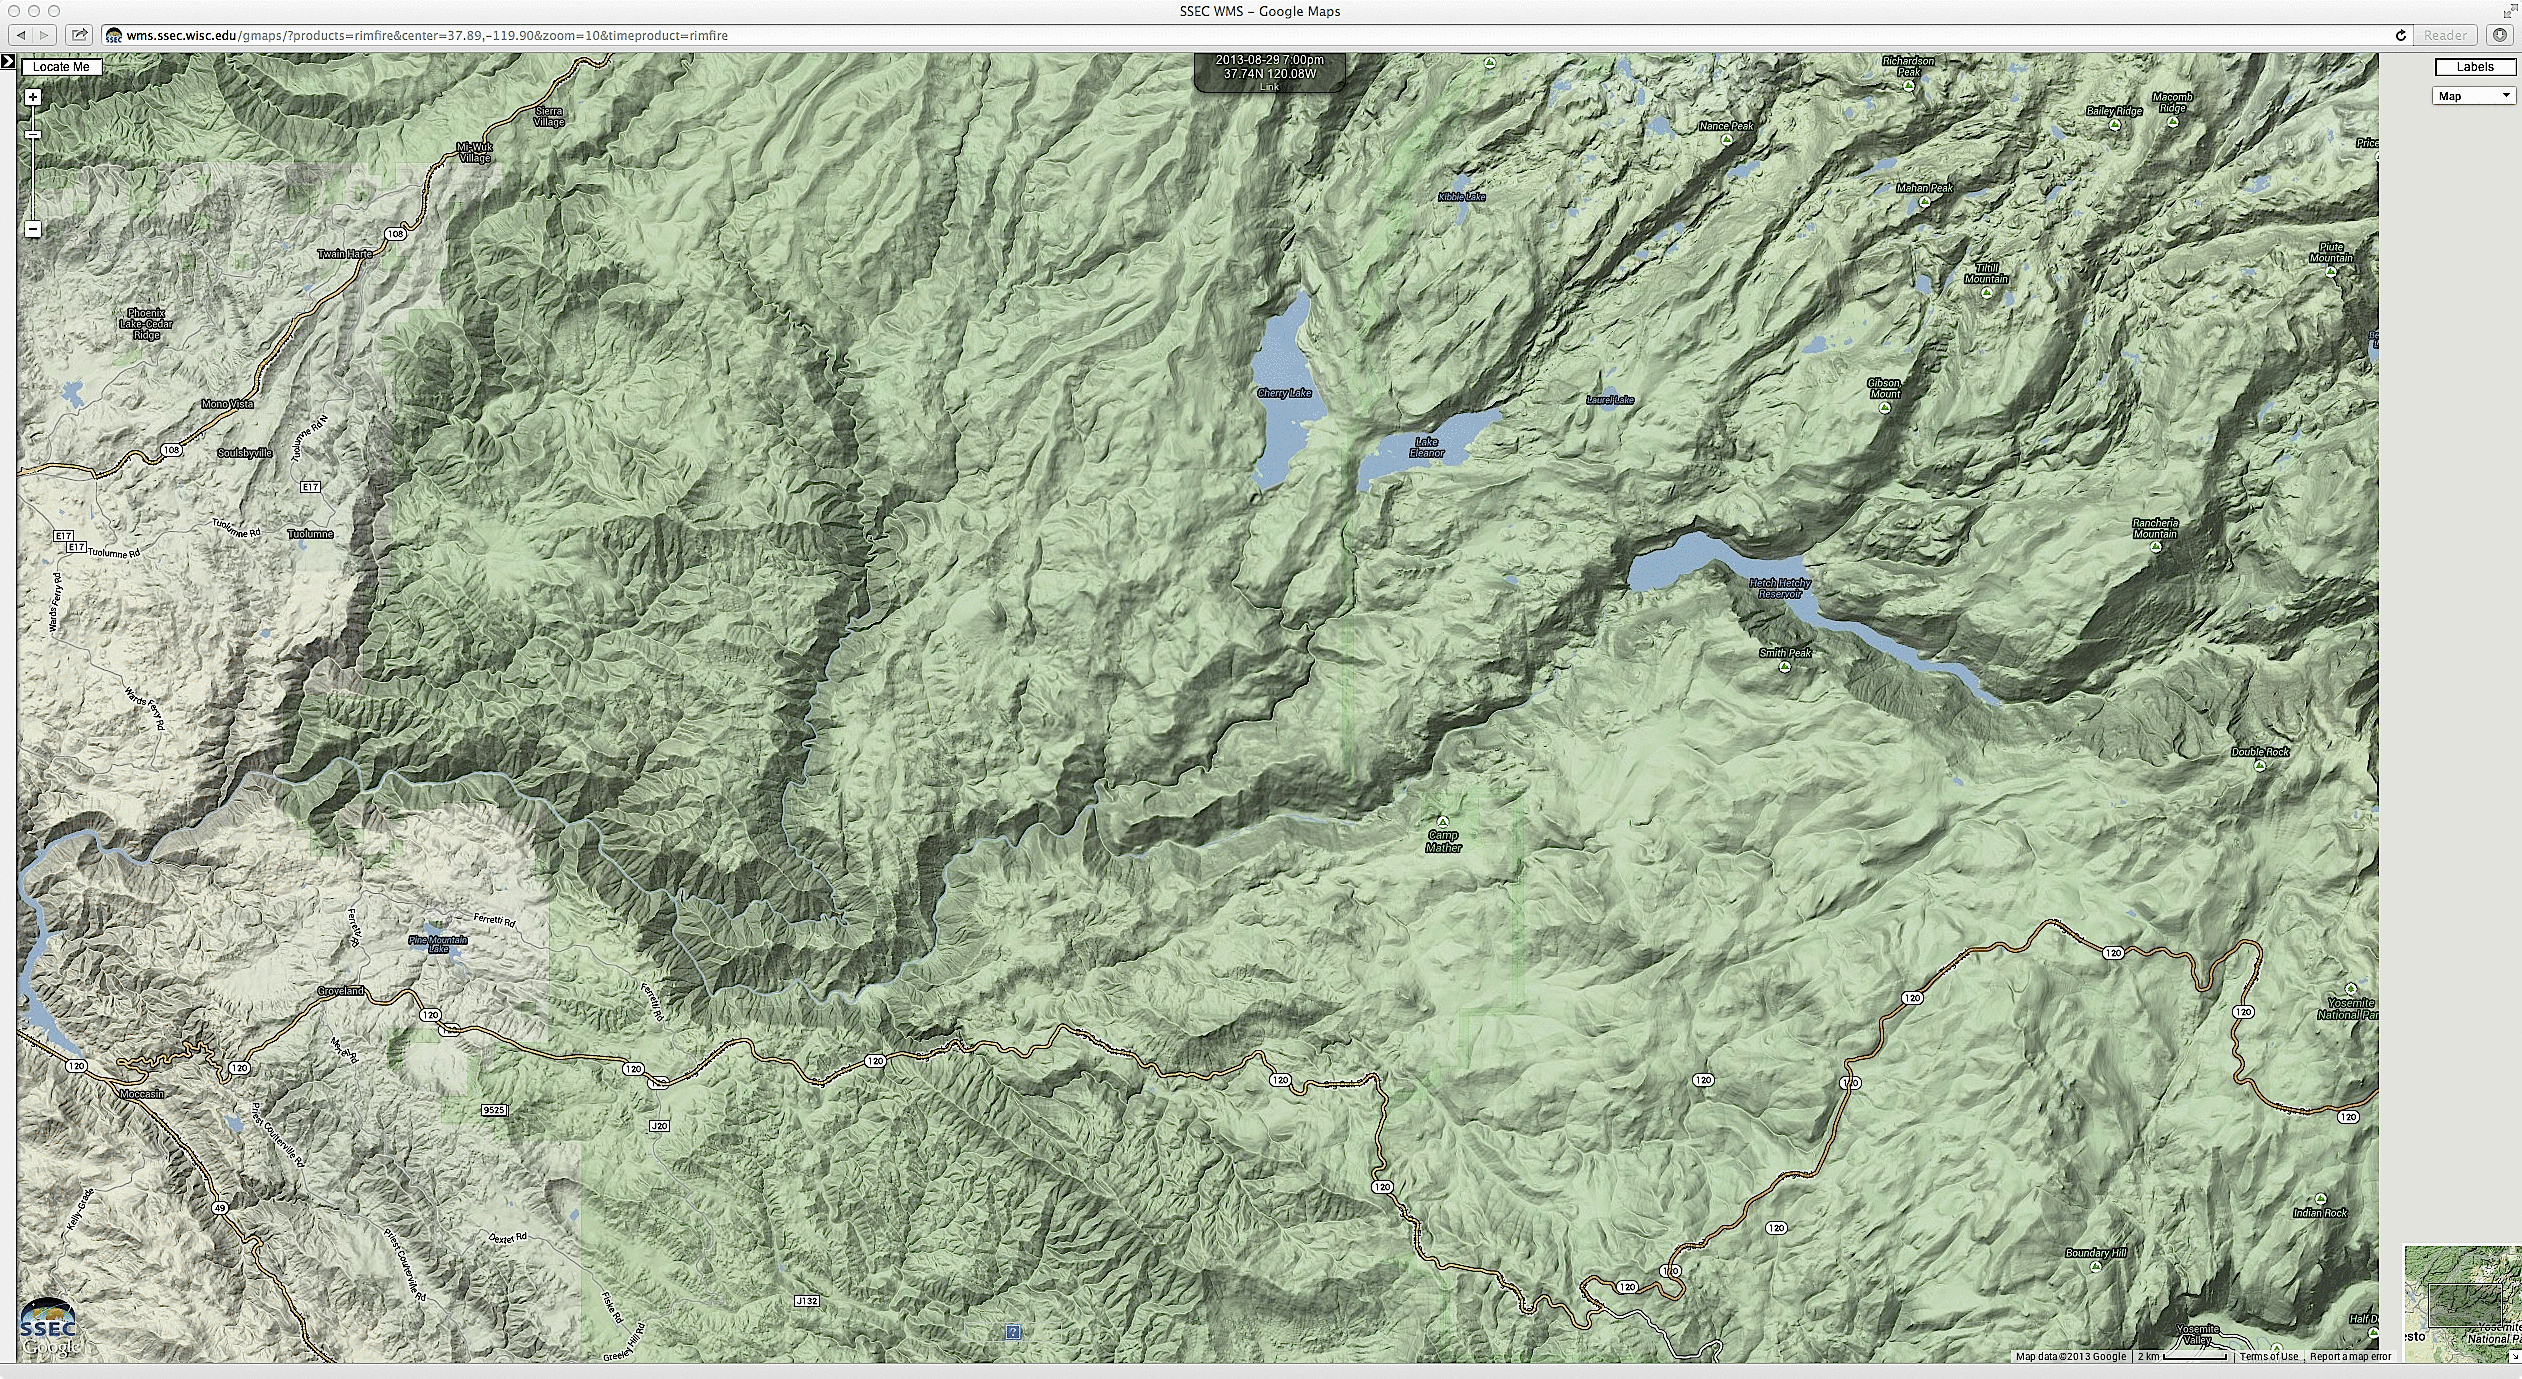 Google Maps terrain, with Landsat-8 false-color Red/Green/Blue (RGB) false-color image